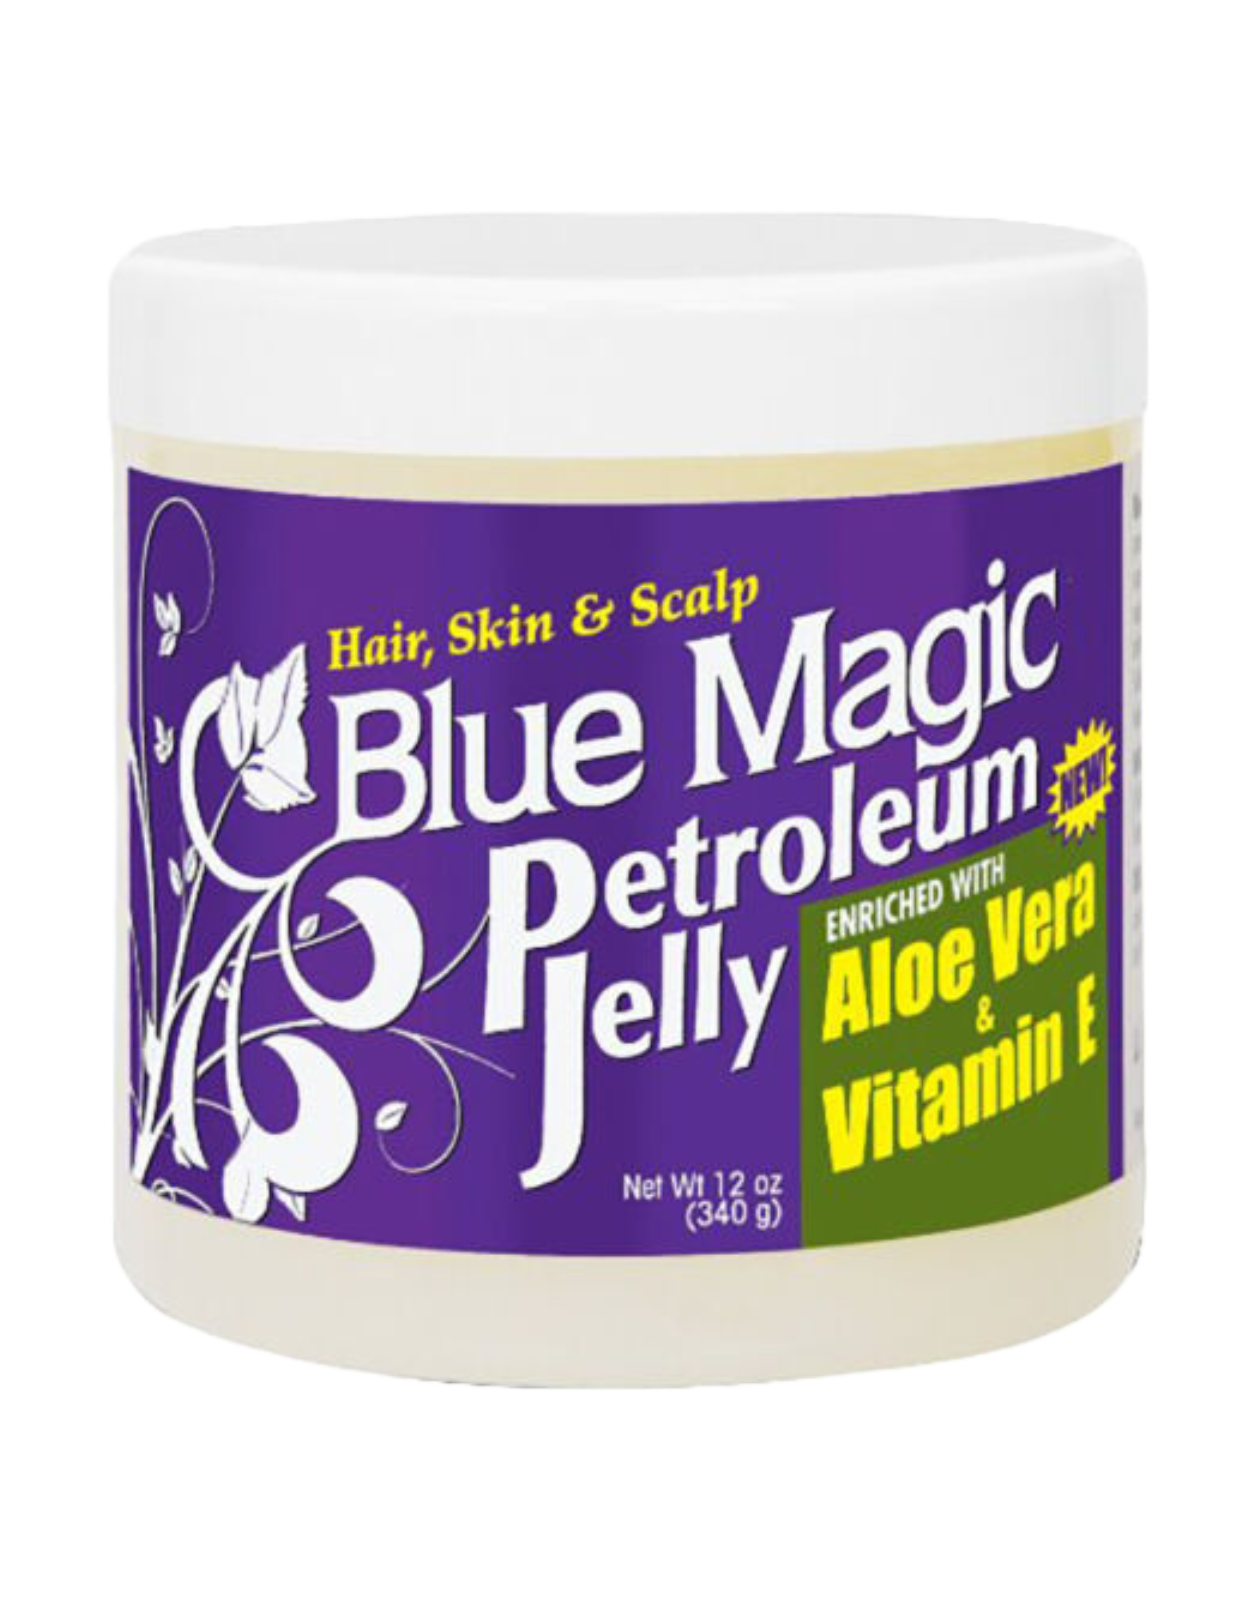 Blue Magic - Petroleum Jelly